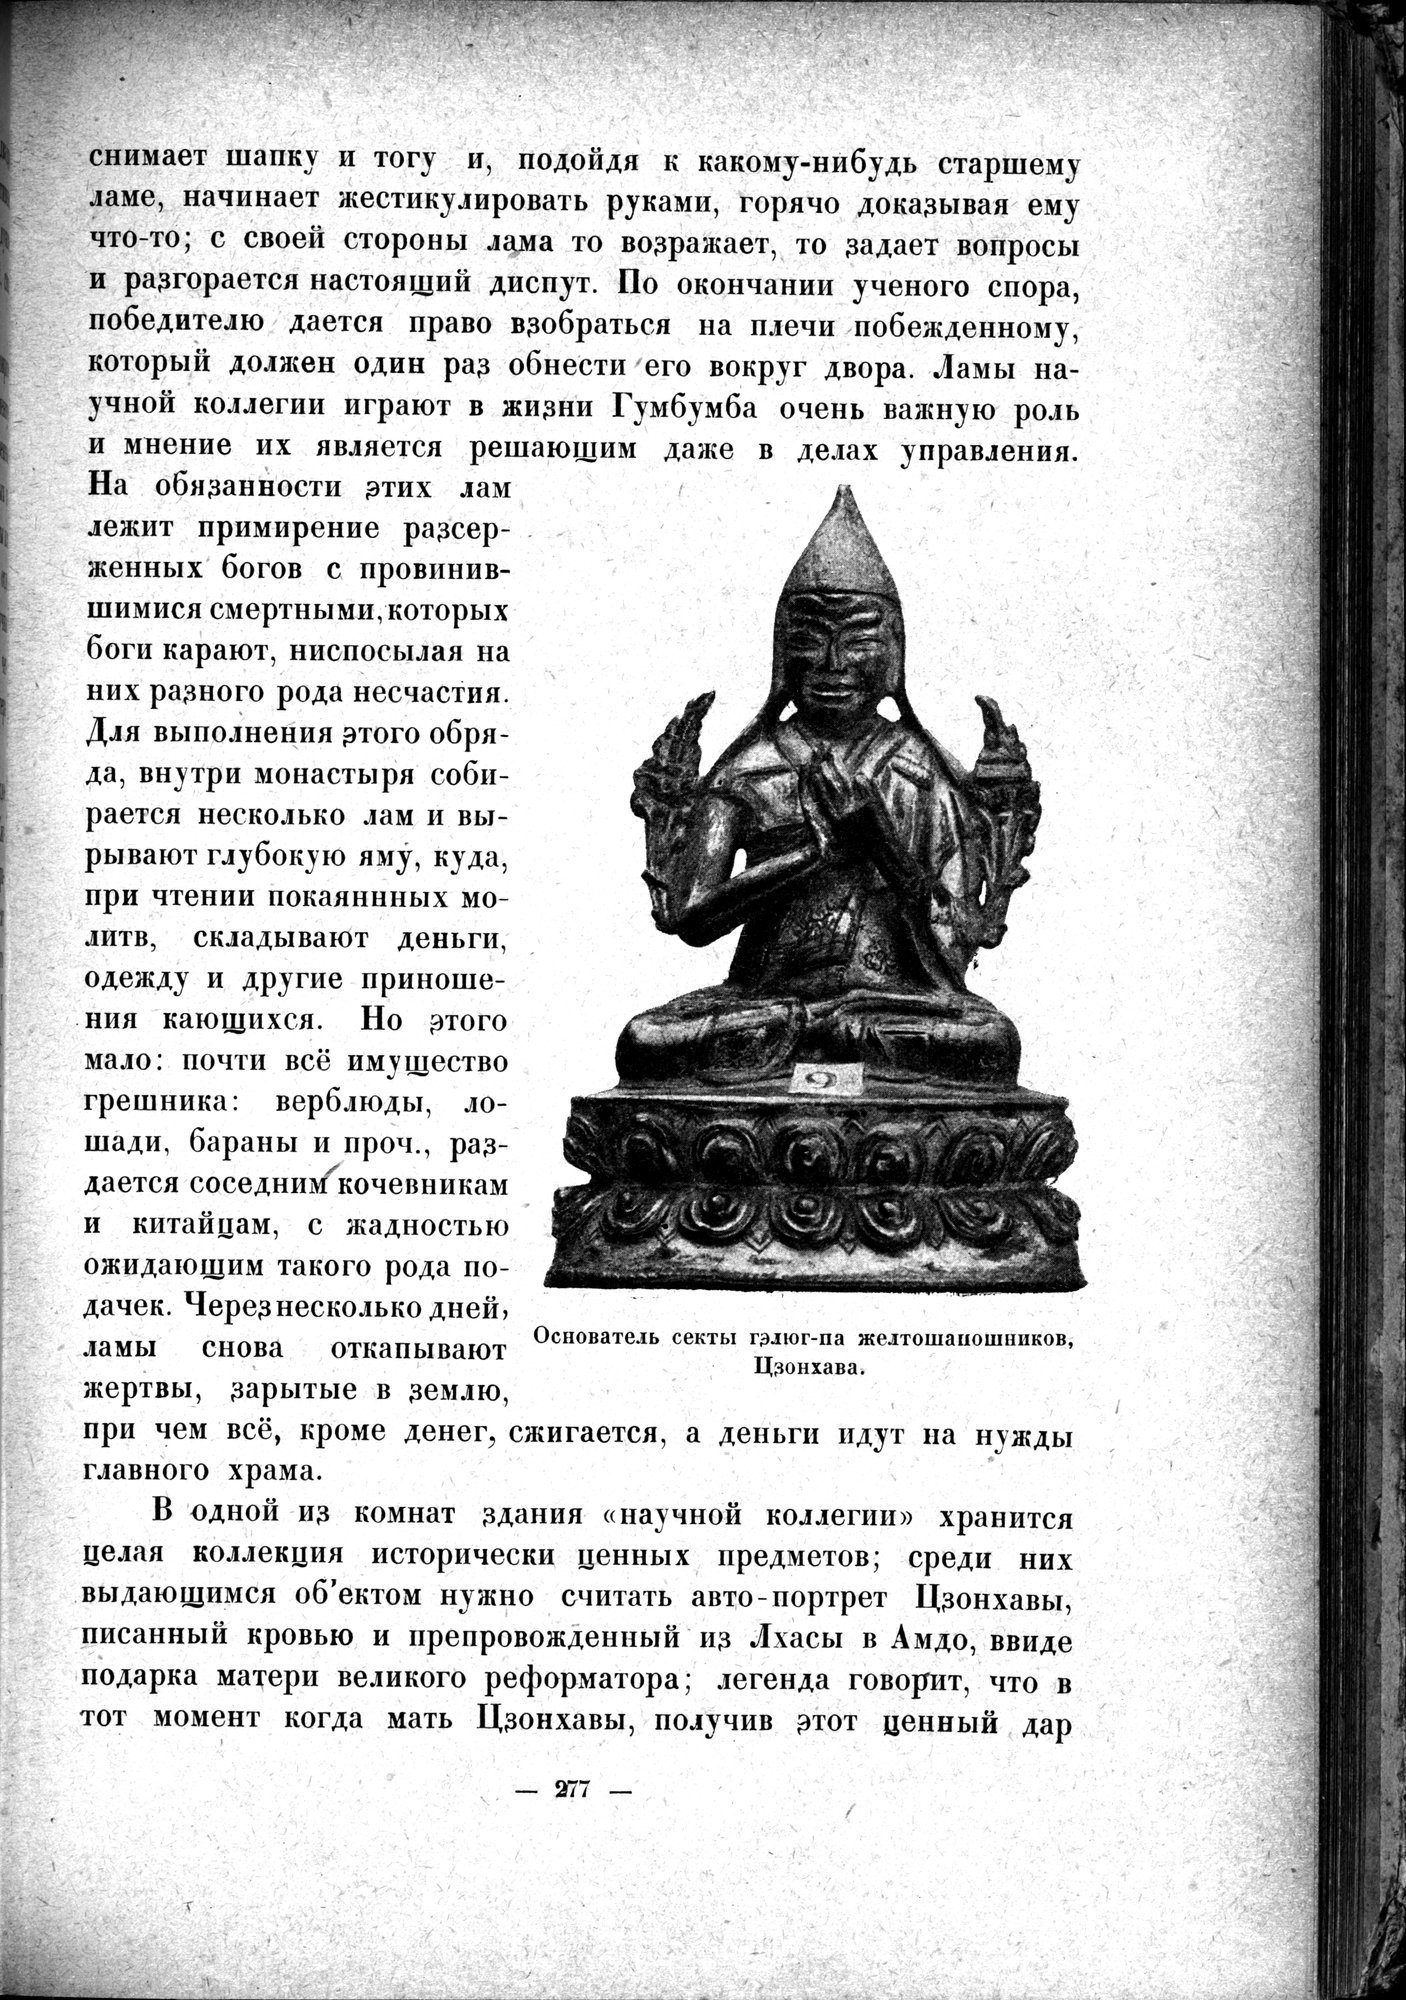 Mongoliya i Amdo i mertby gorod Khara-Khoto : vol.1 / Page 327 (Grayscale High Resolution Image)